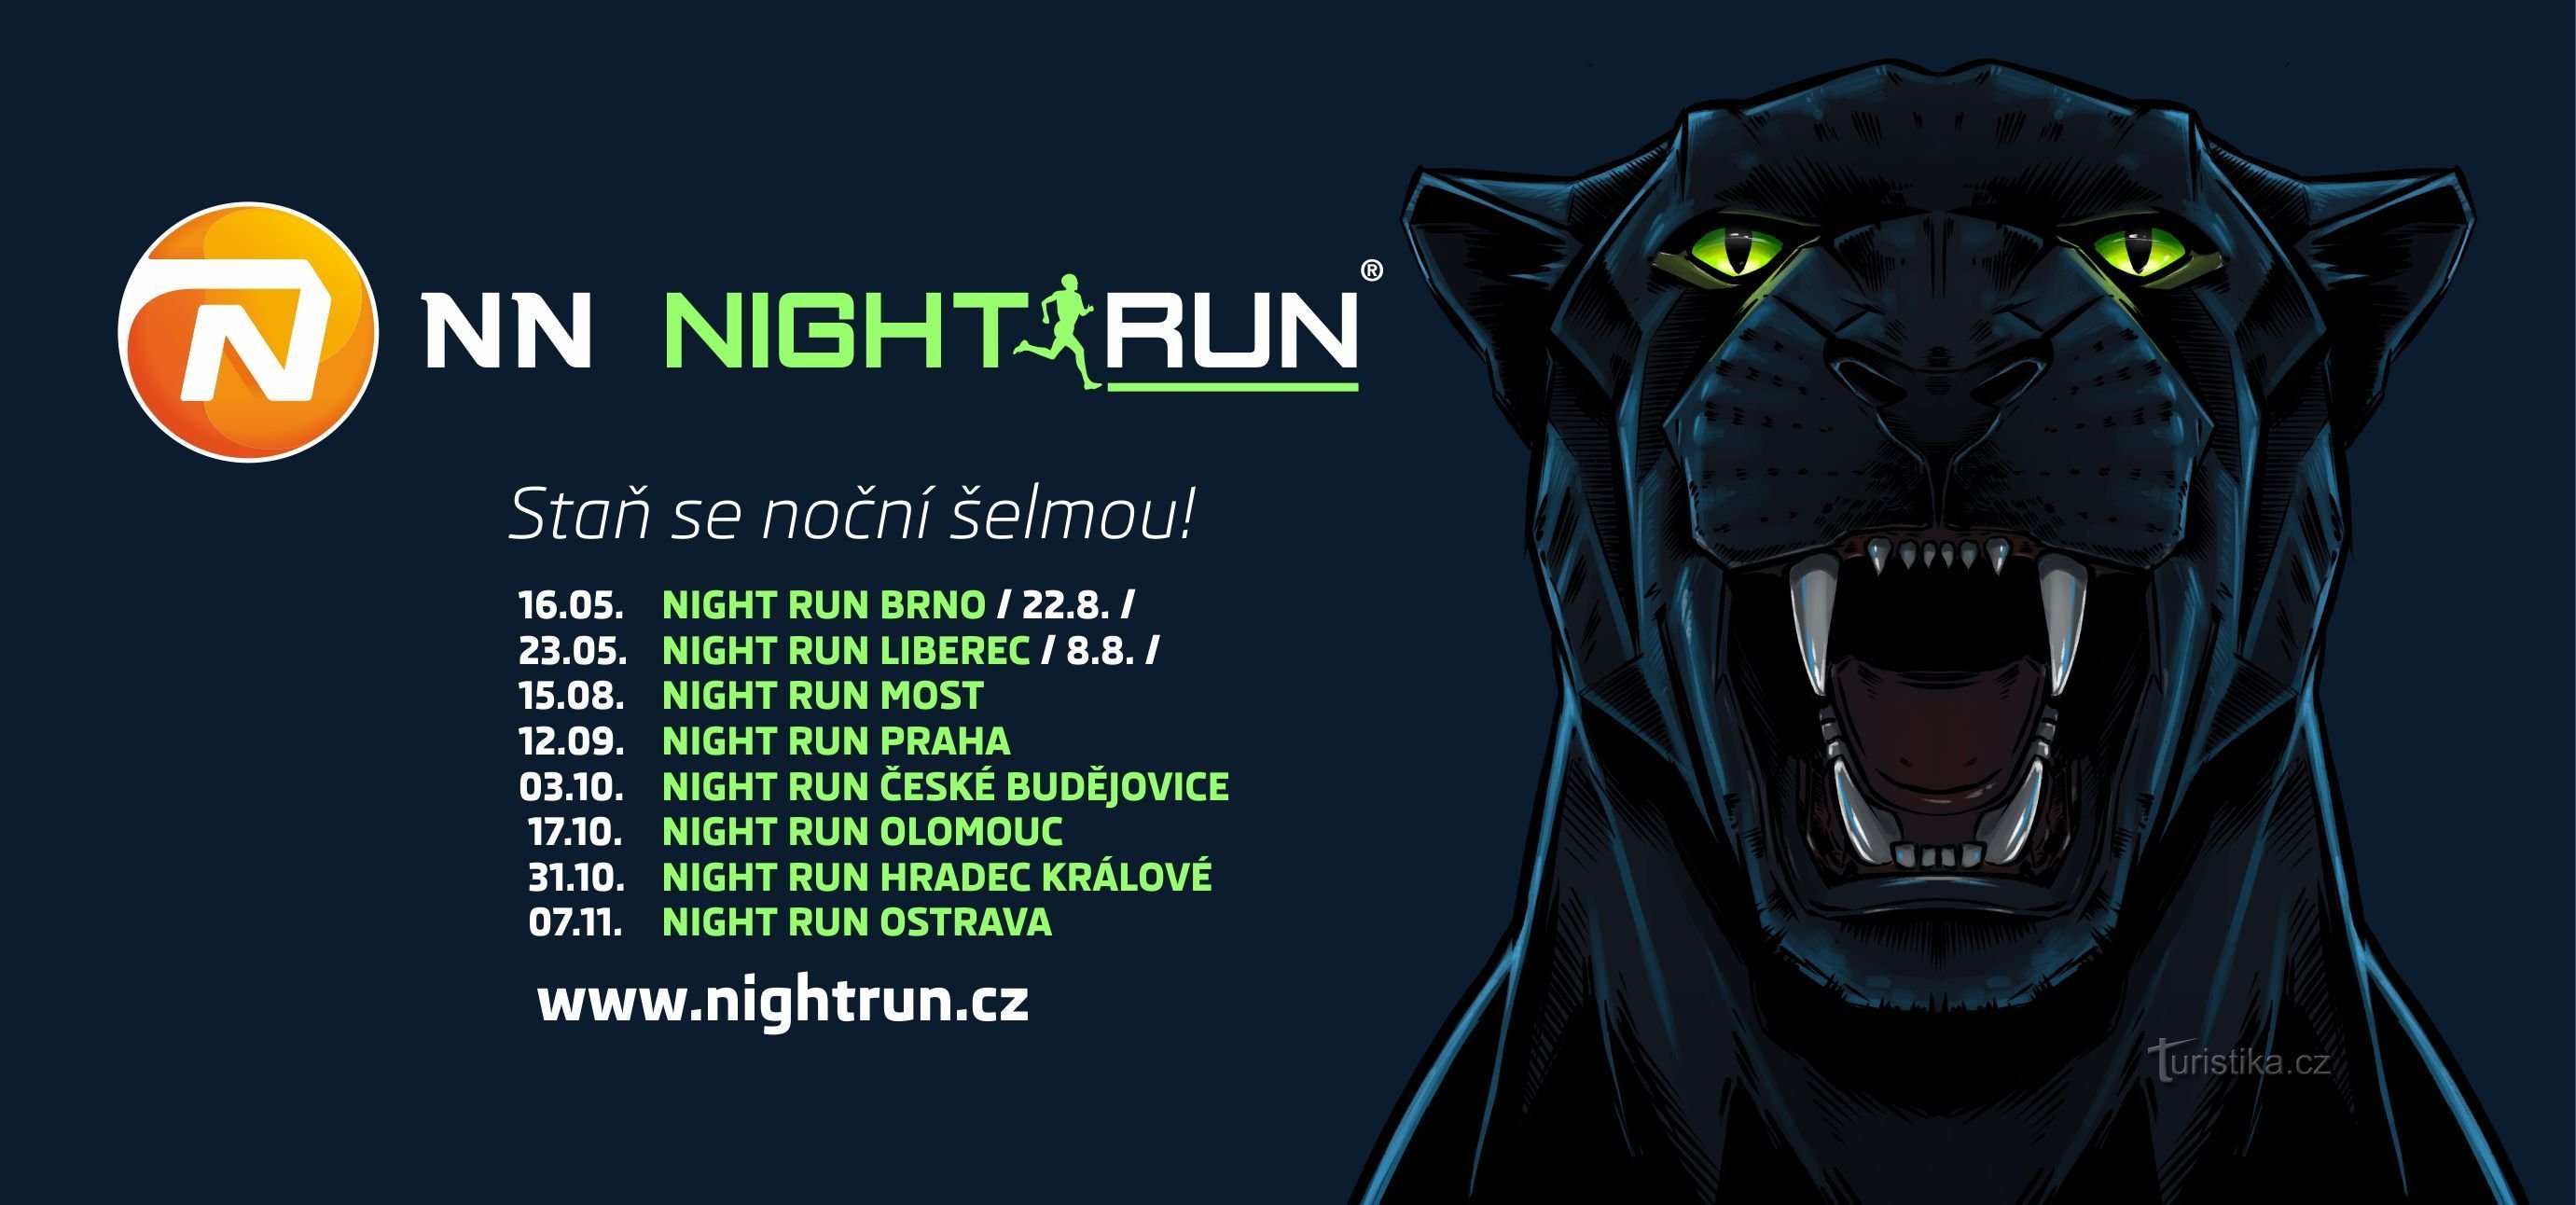 NN NIGHT RUN: Sete razões para correr